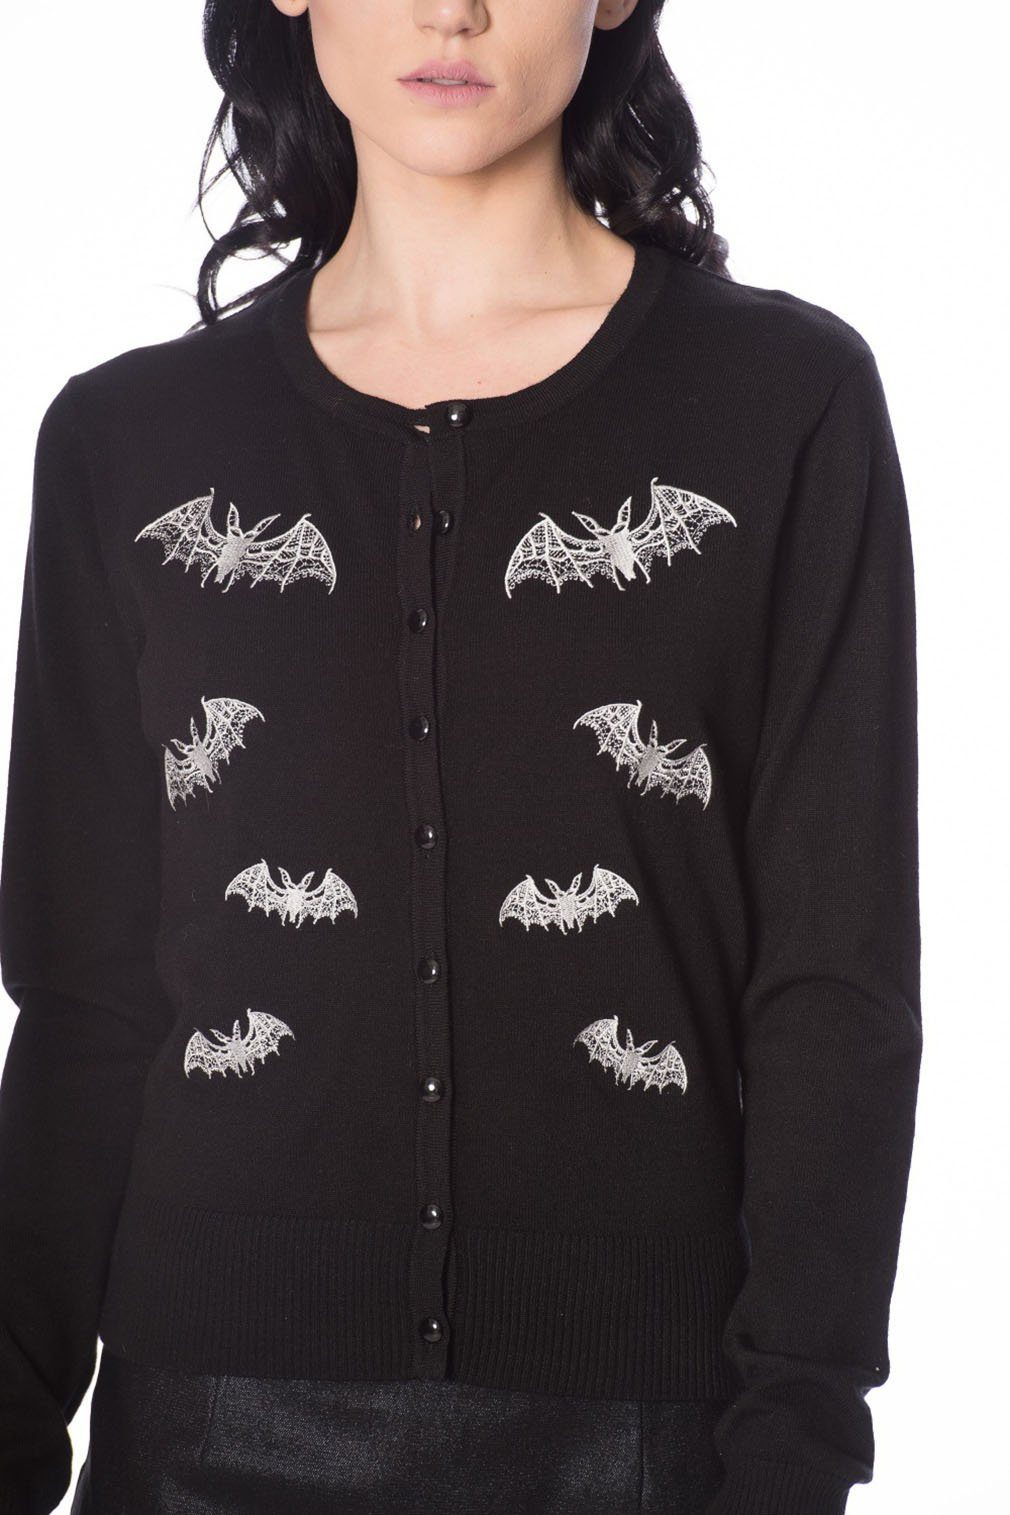 Banned Bestickte Bats Cardigan Fledermäuse Gothic Strickjacke Lace